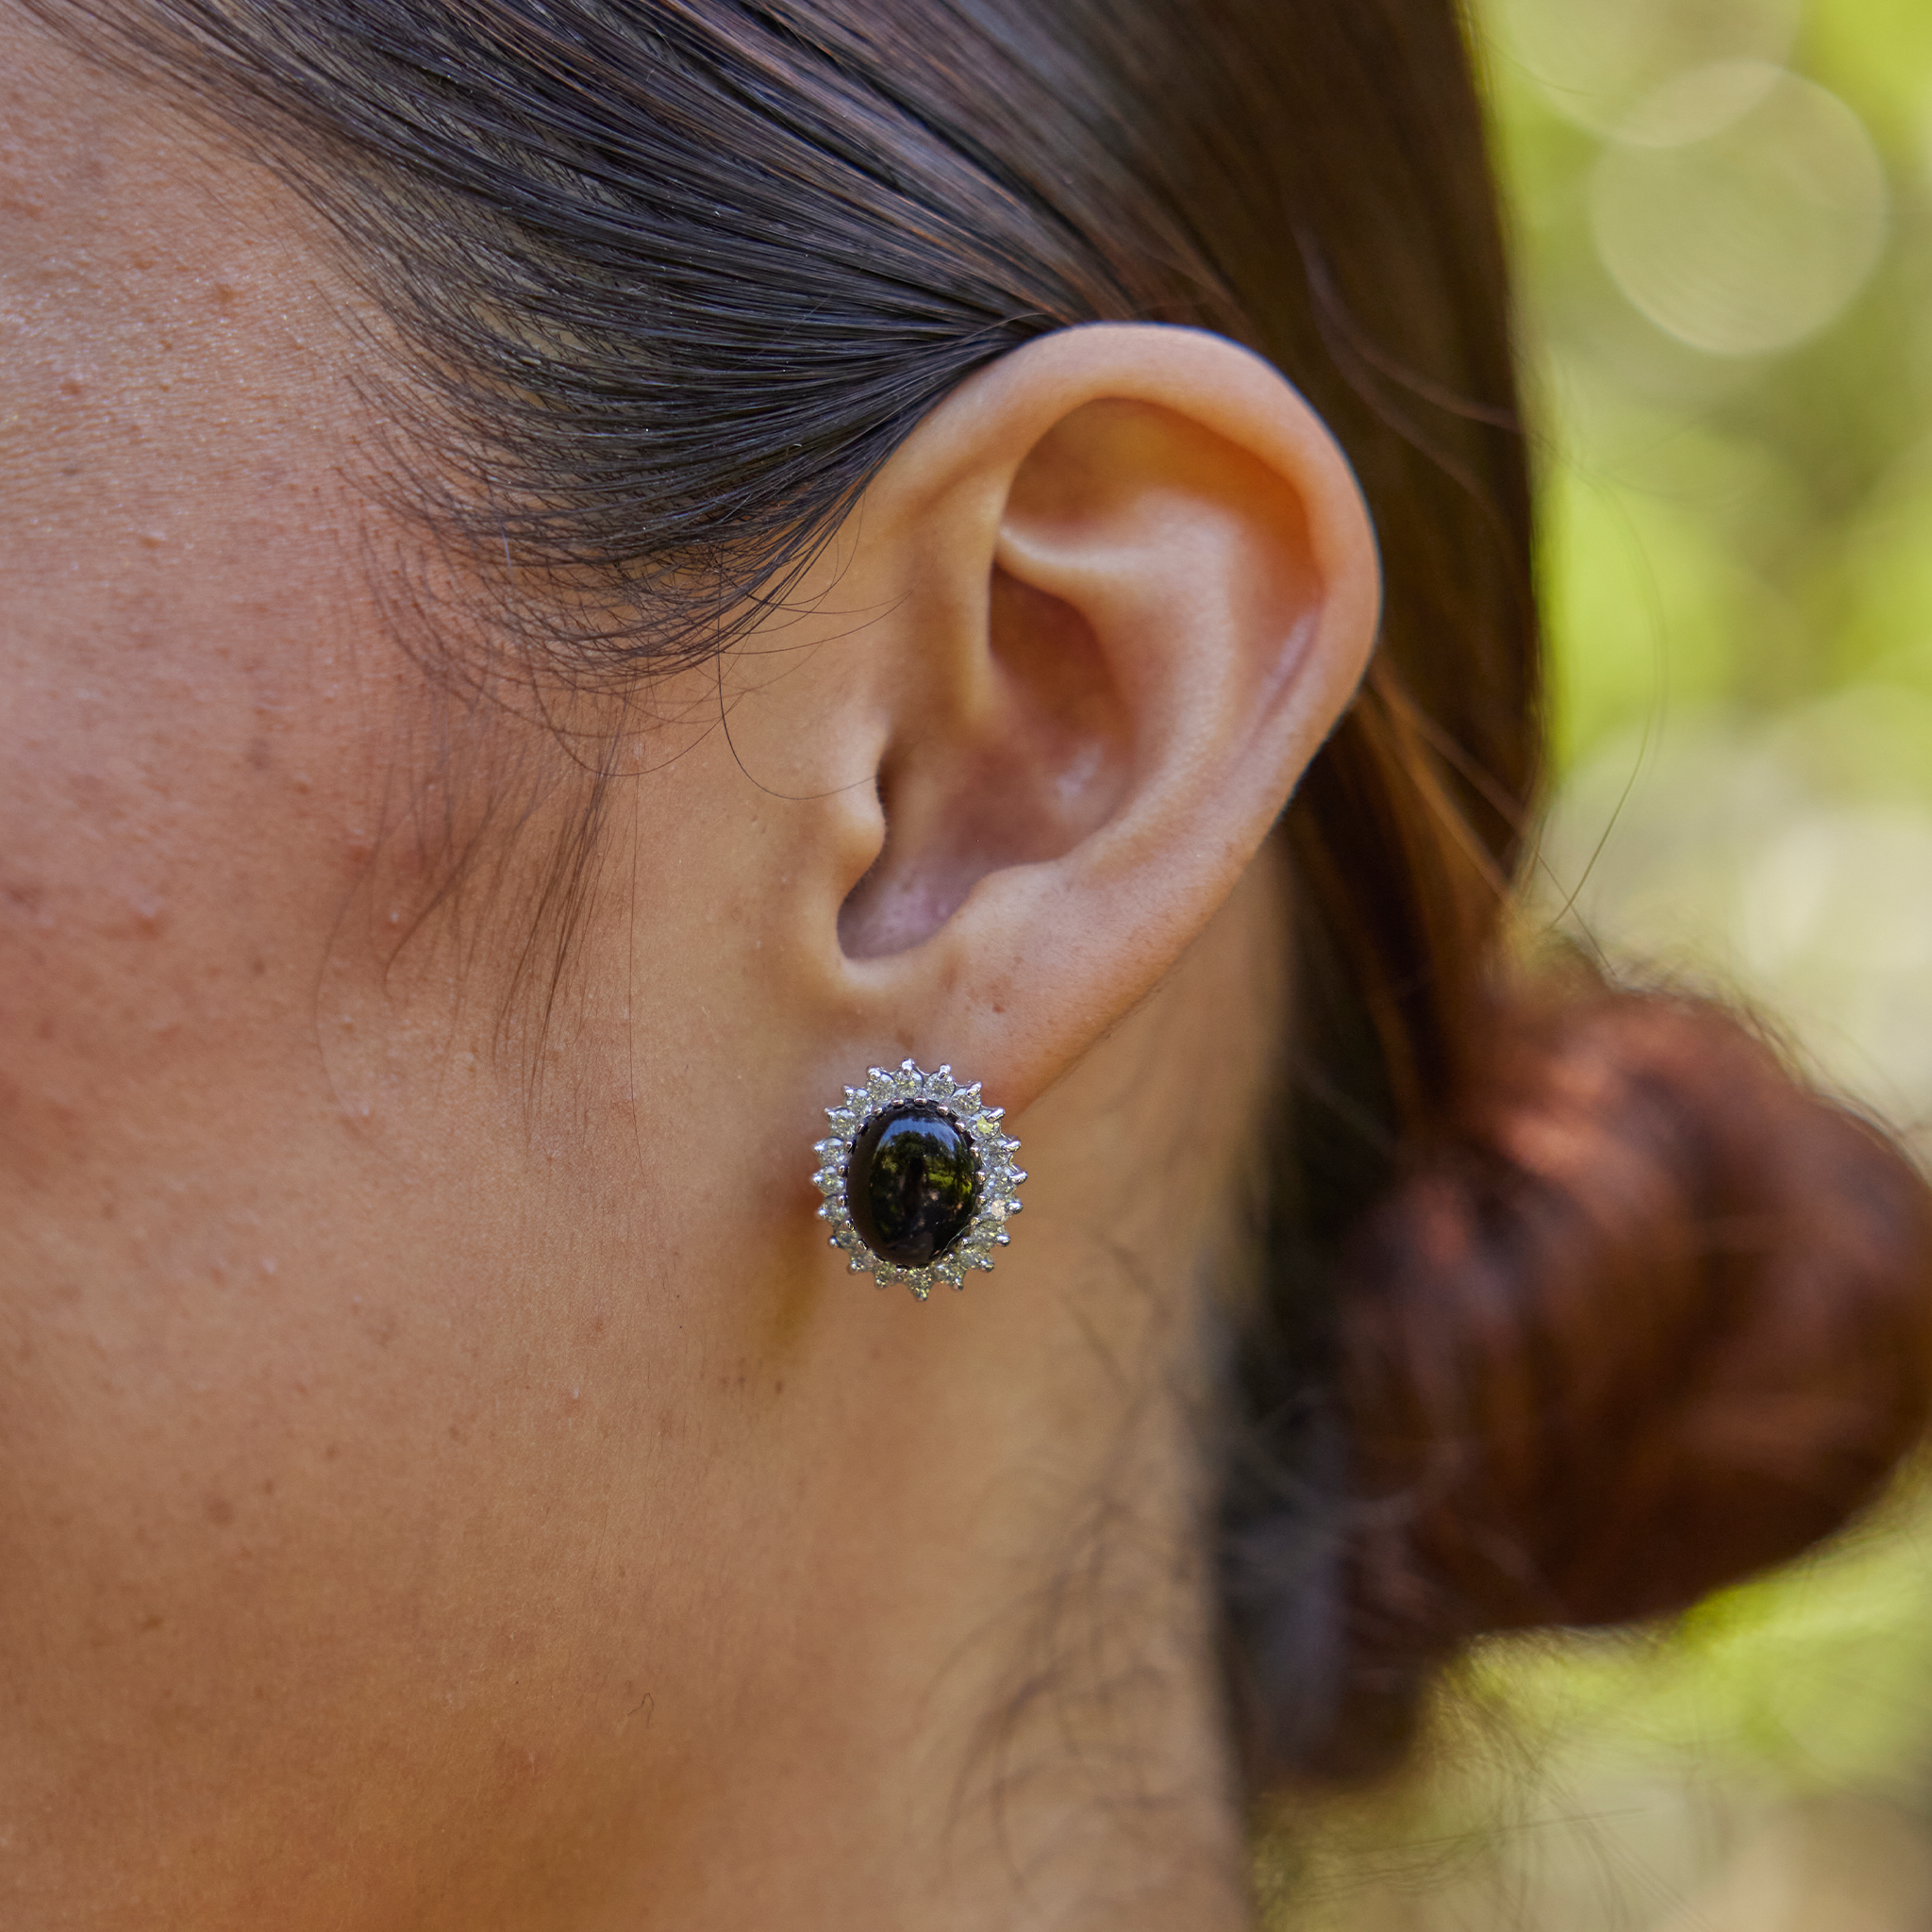 Princess Ka‘iulani Black Coral Earrings in White Gold with Diamonds - 10mm